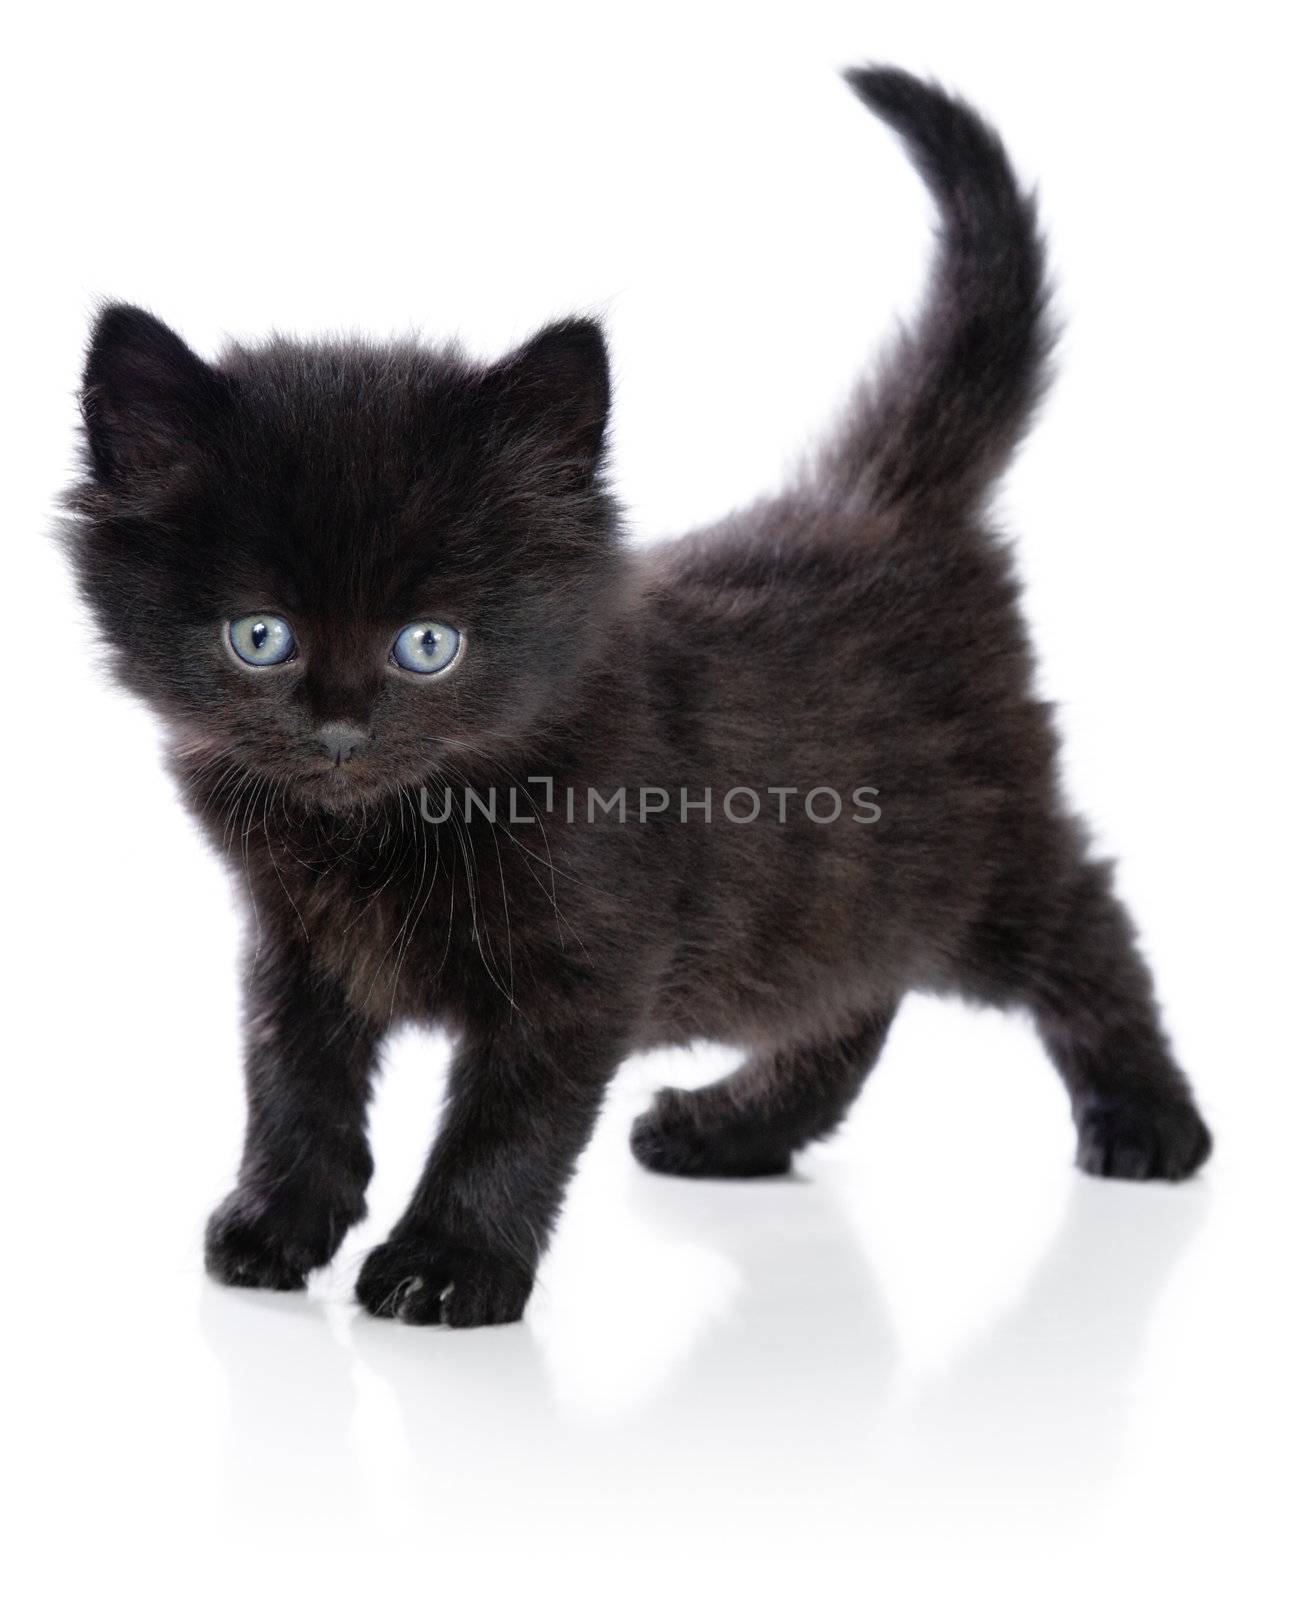 Black little kitten standing up on a white background